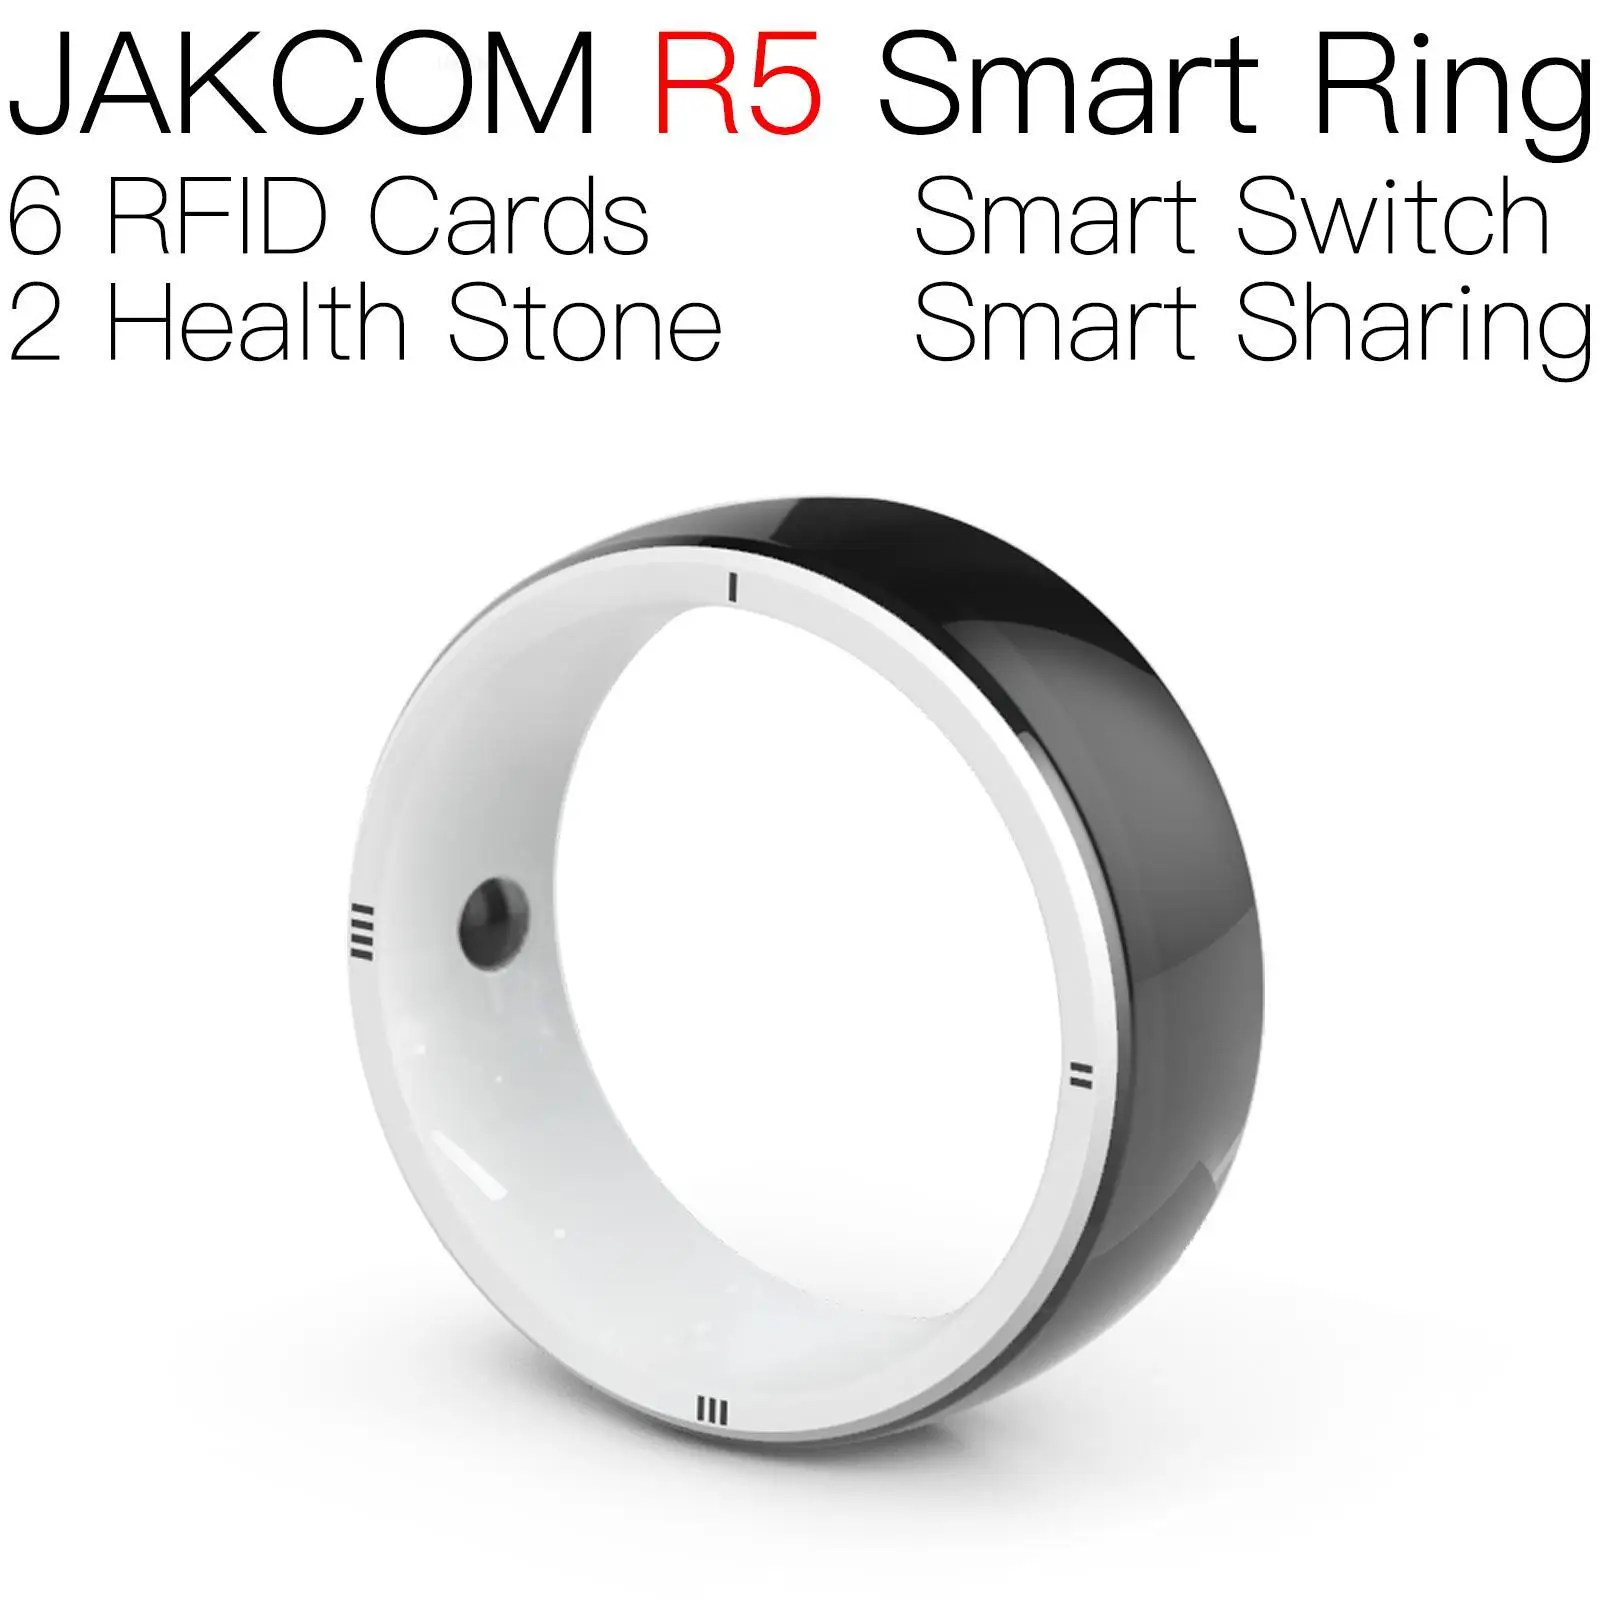 JAKCOM R5 Smart Ring Nice than card 125 khz rfid 100 db computer france badge nfc cafe amibo implant drill tag long range